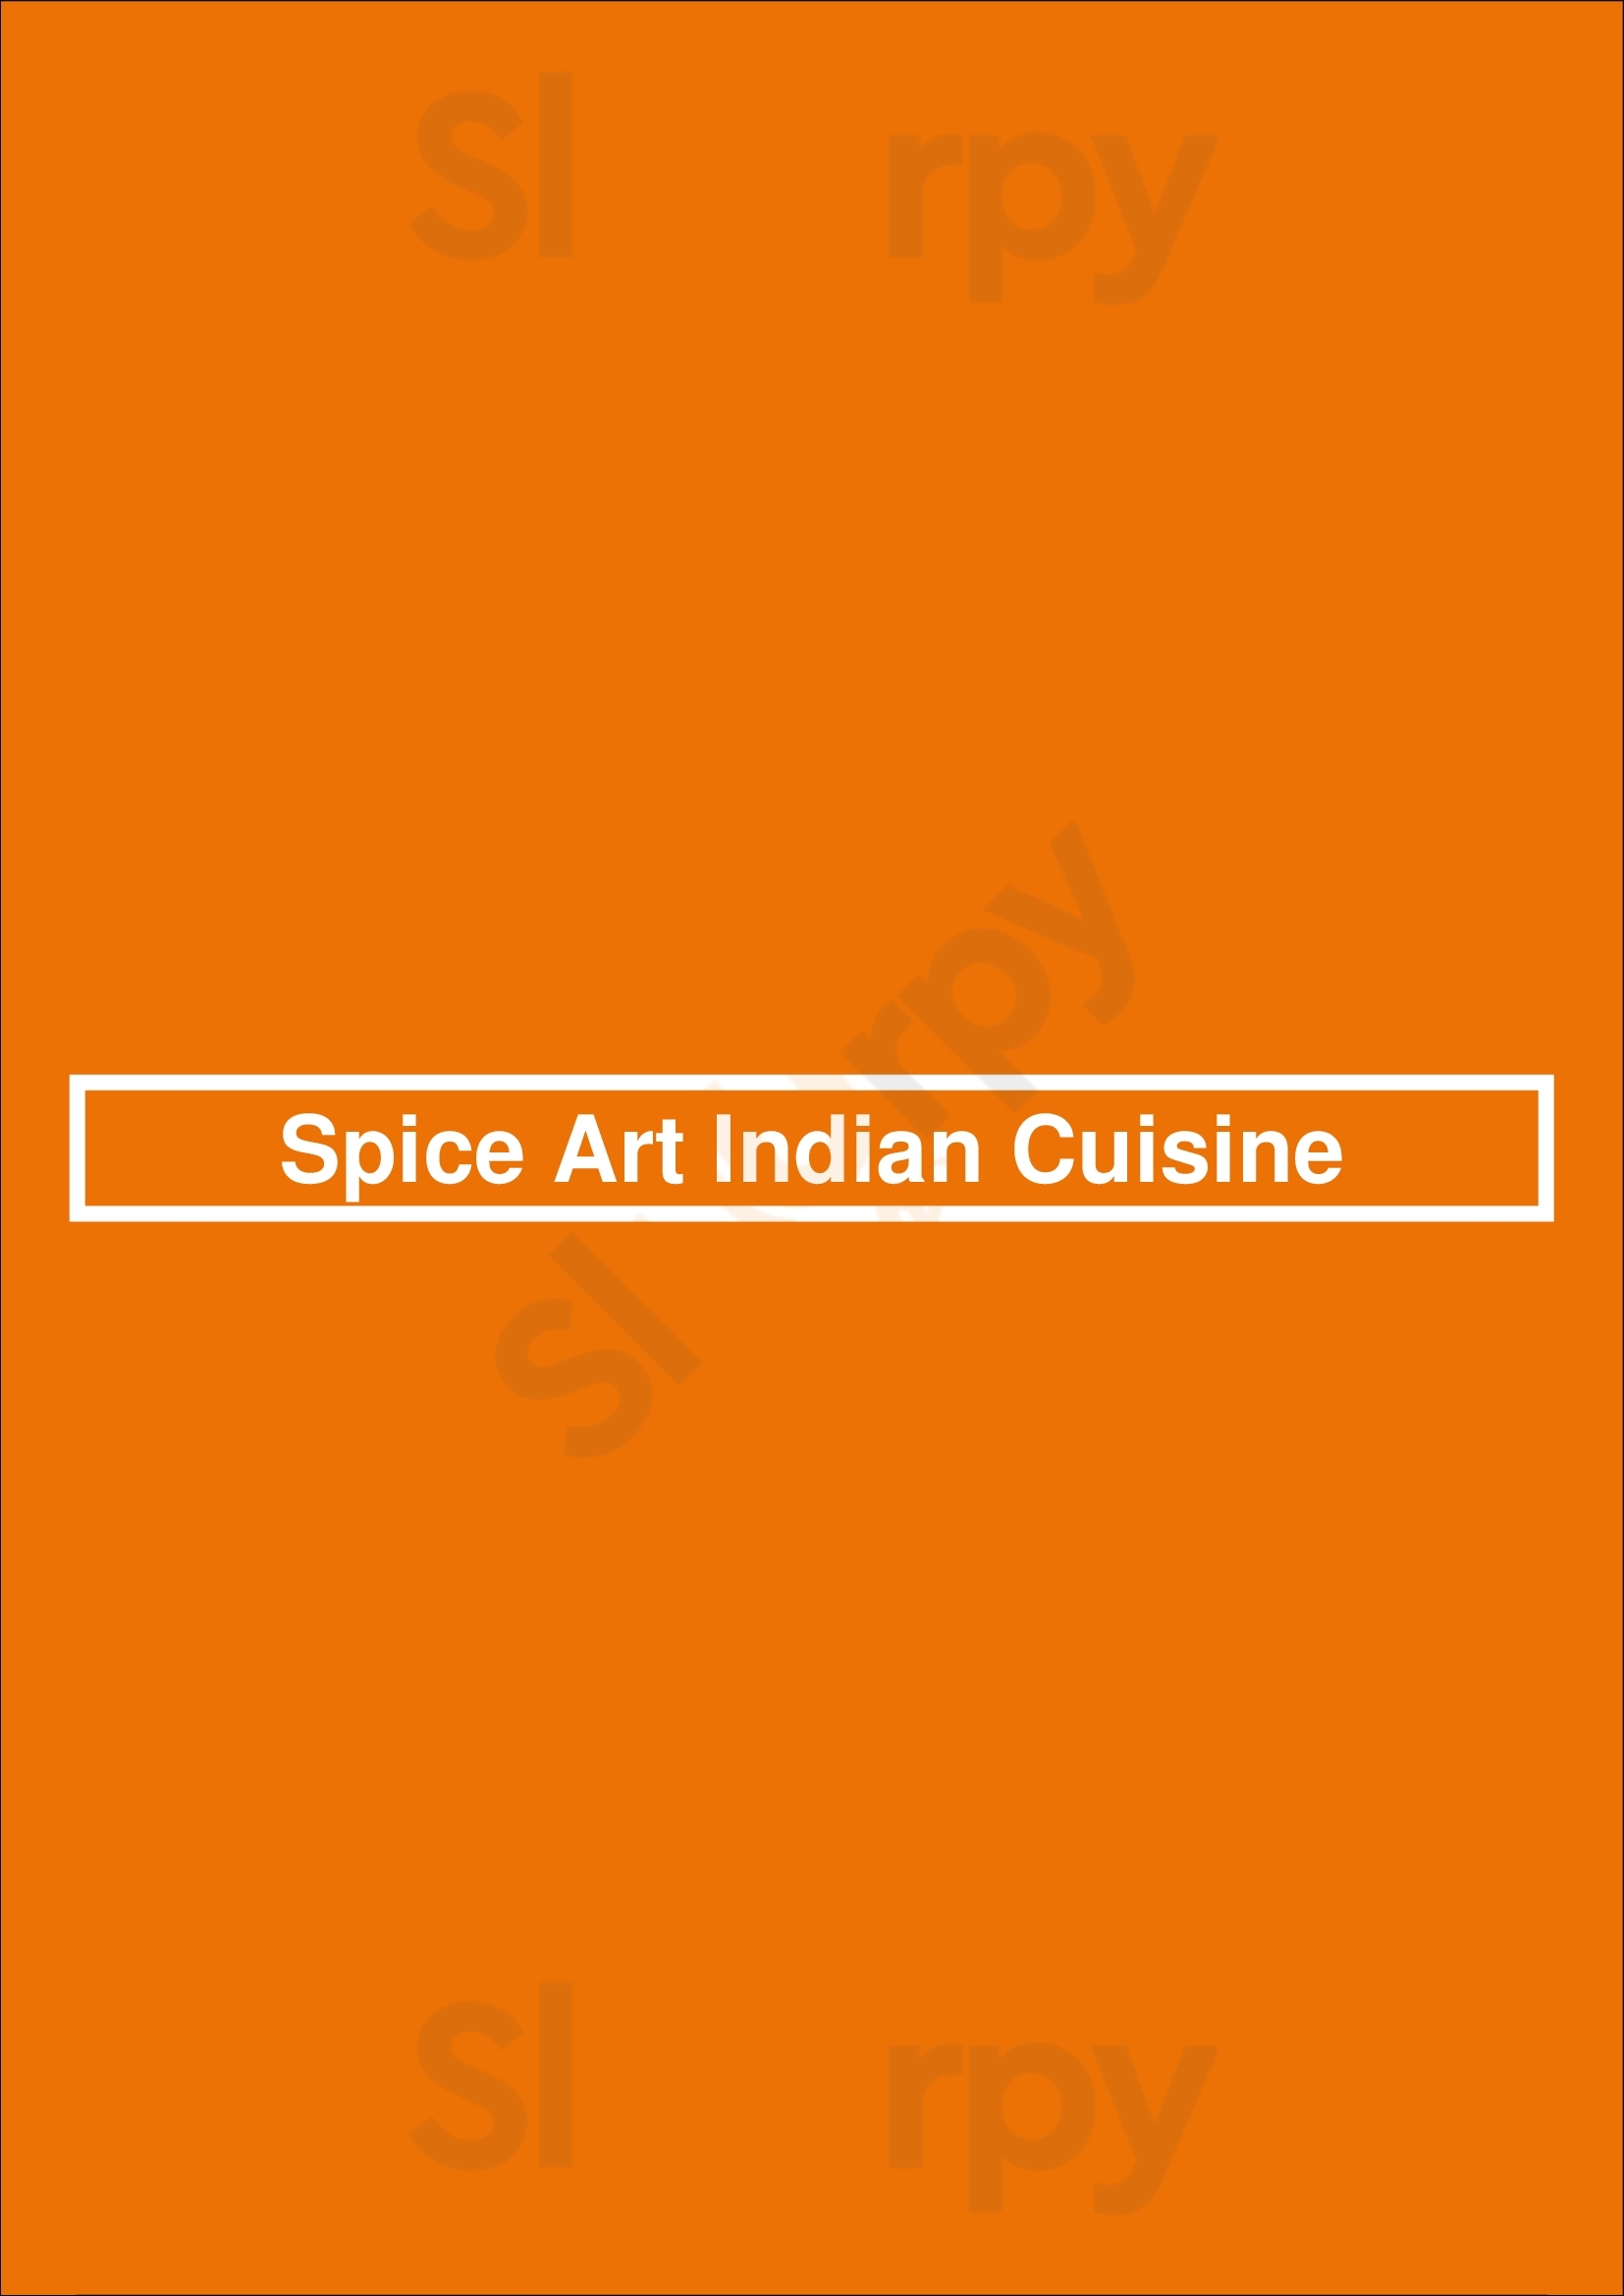 Spice Art Indian Cuisine Port Coquitlam Menu - 1